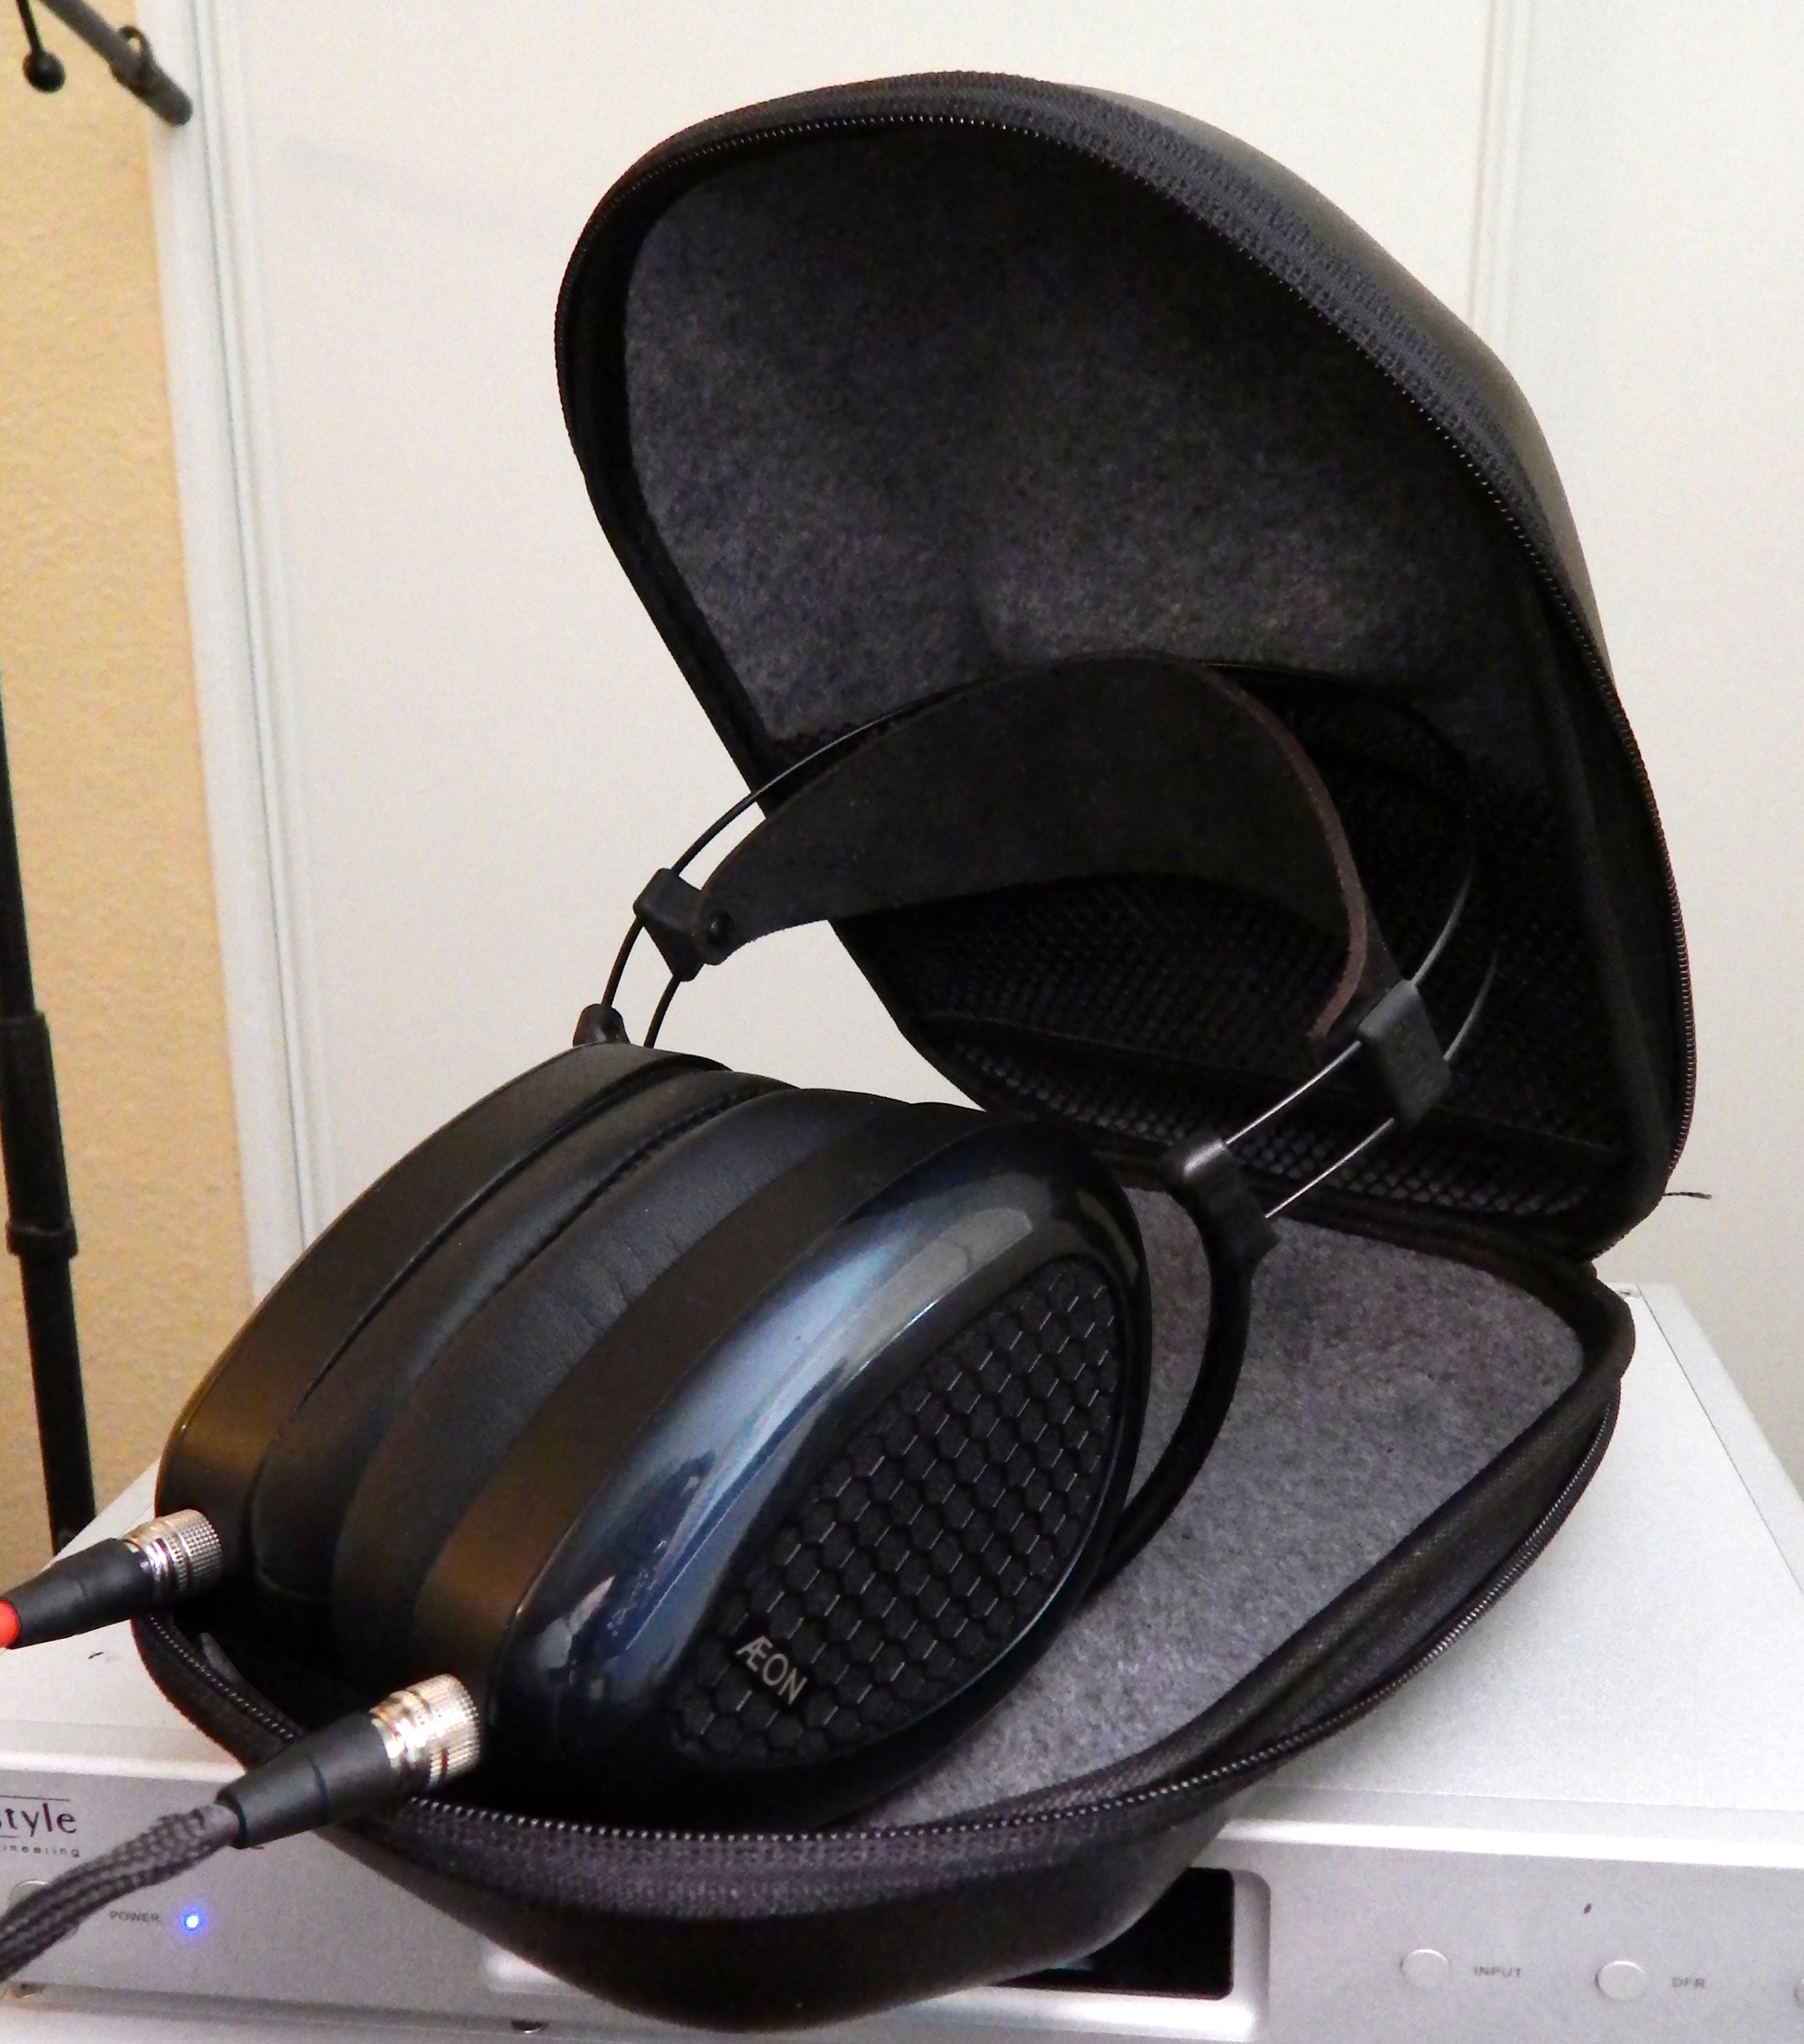 MrSpeakers AEON Flow Open Back Orthodynamic Headphones – The